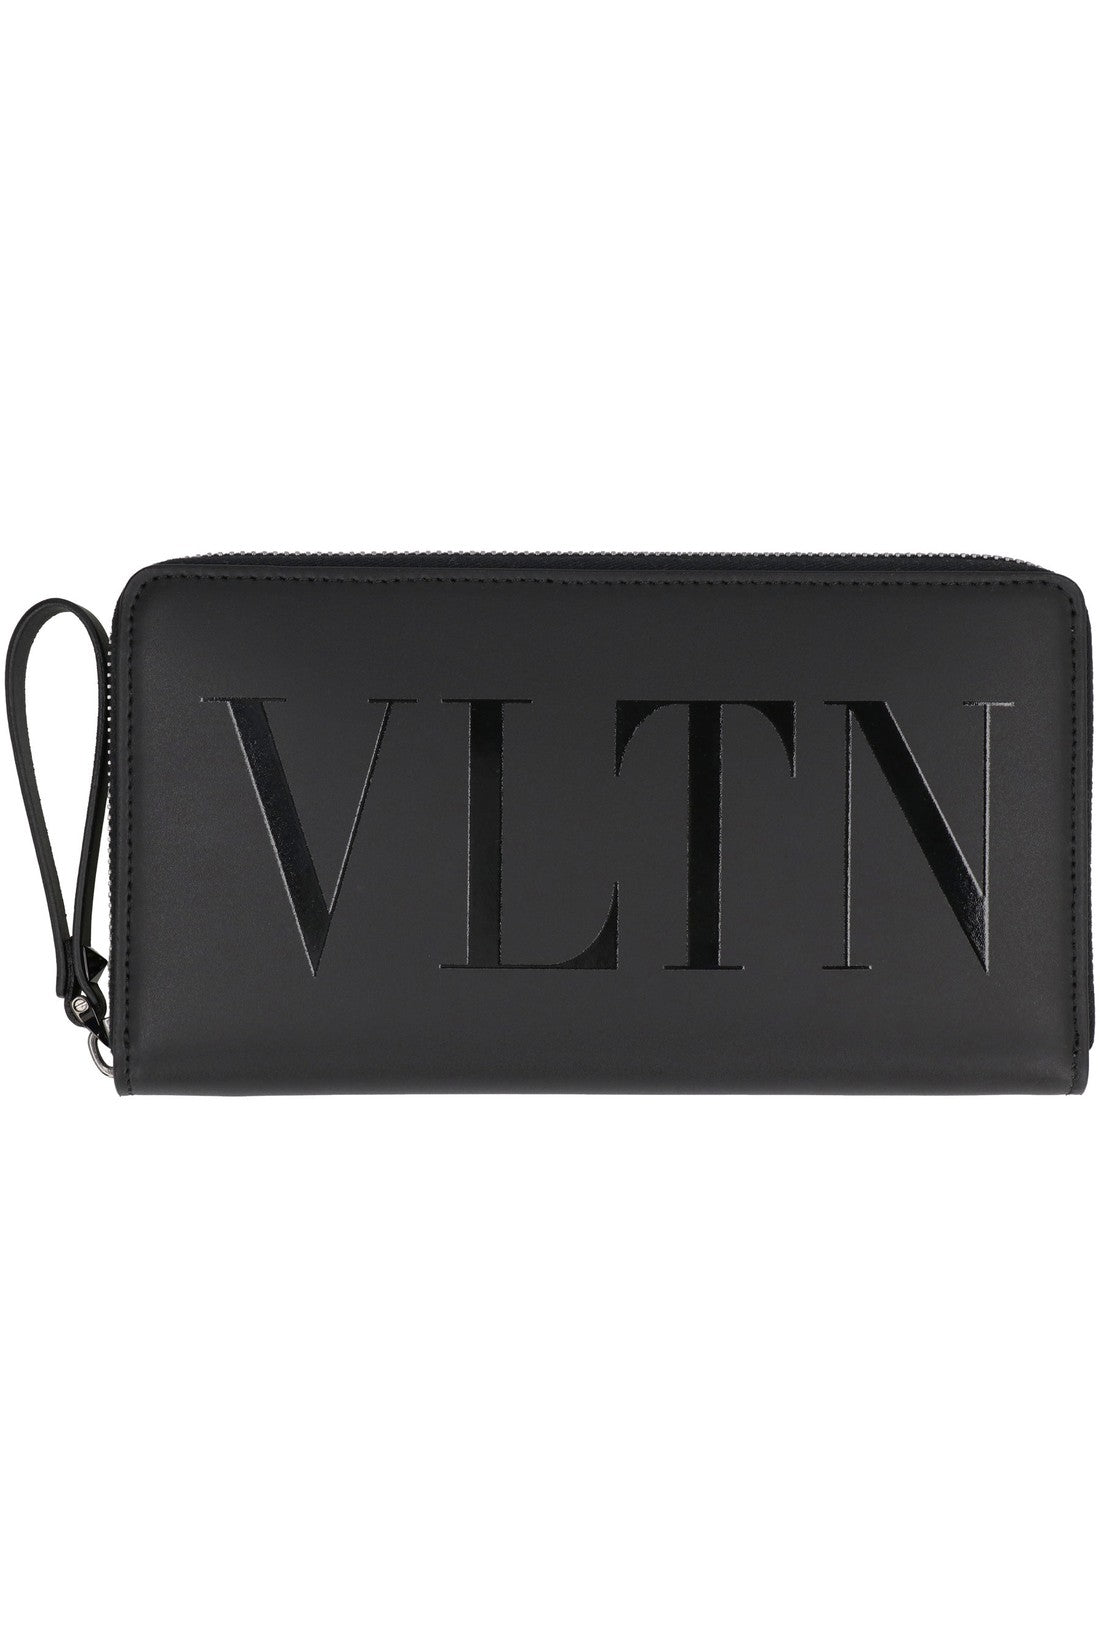 Valentino-OUTLET-SALE-Valentino Garavani - Logo leather wallet-ARCHIVIST